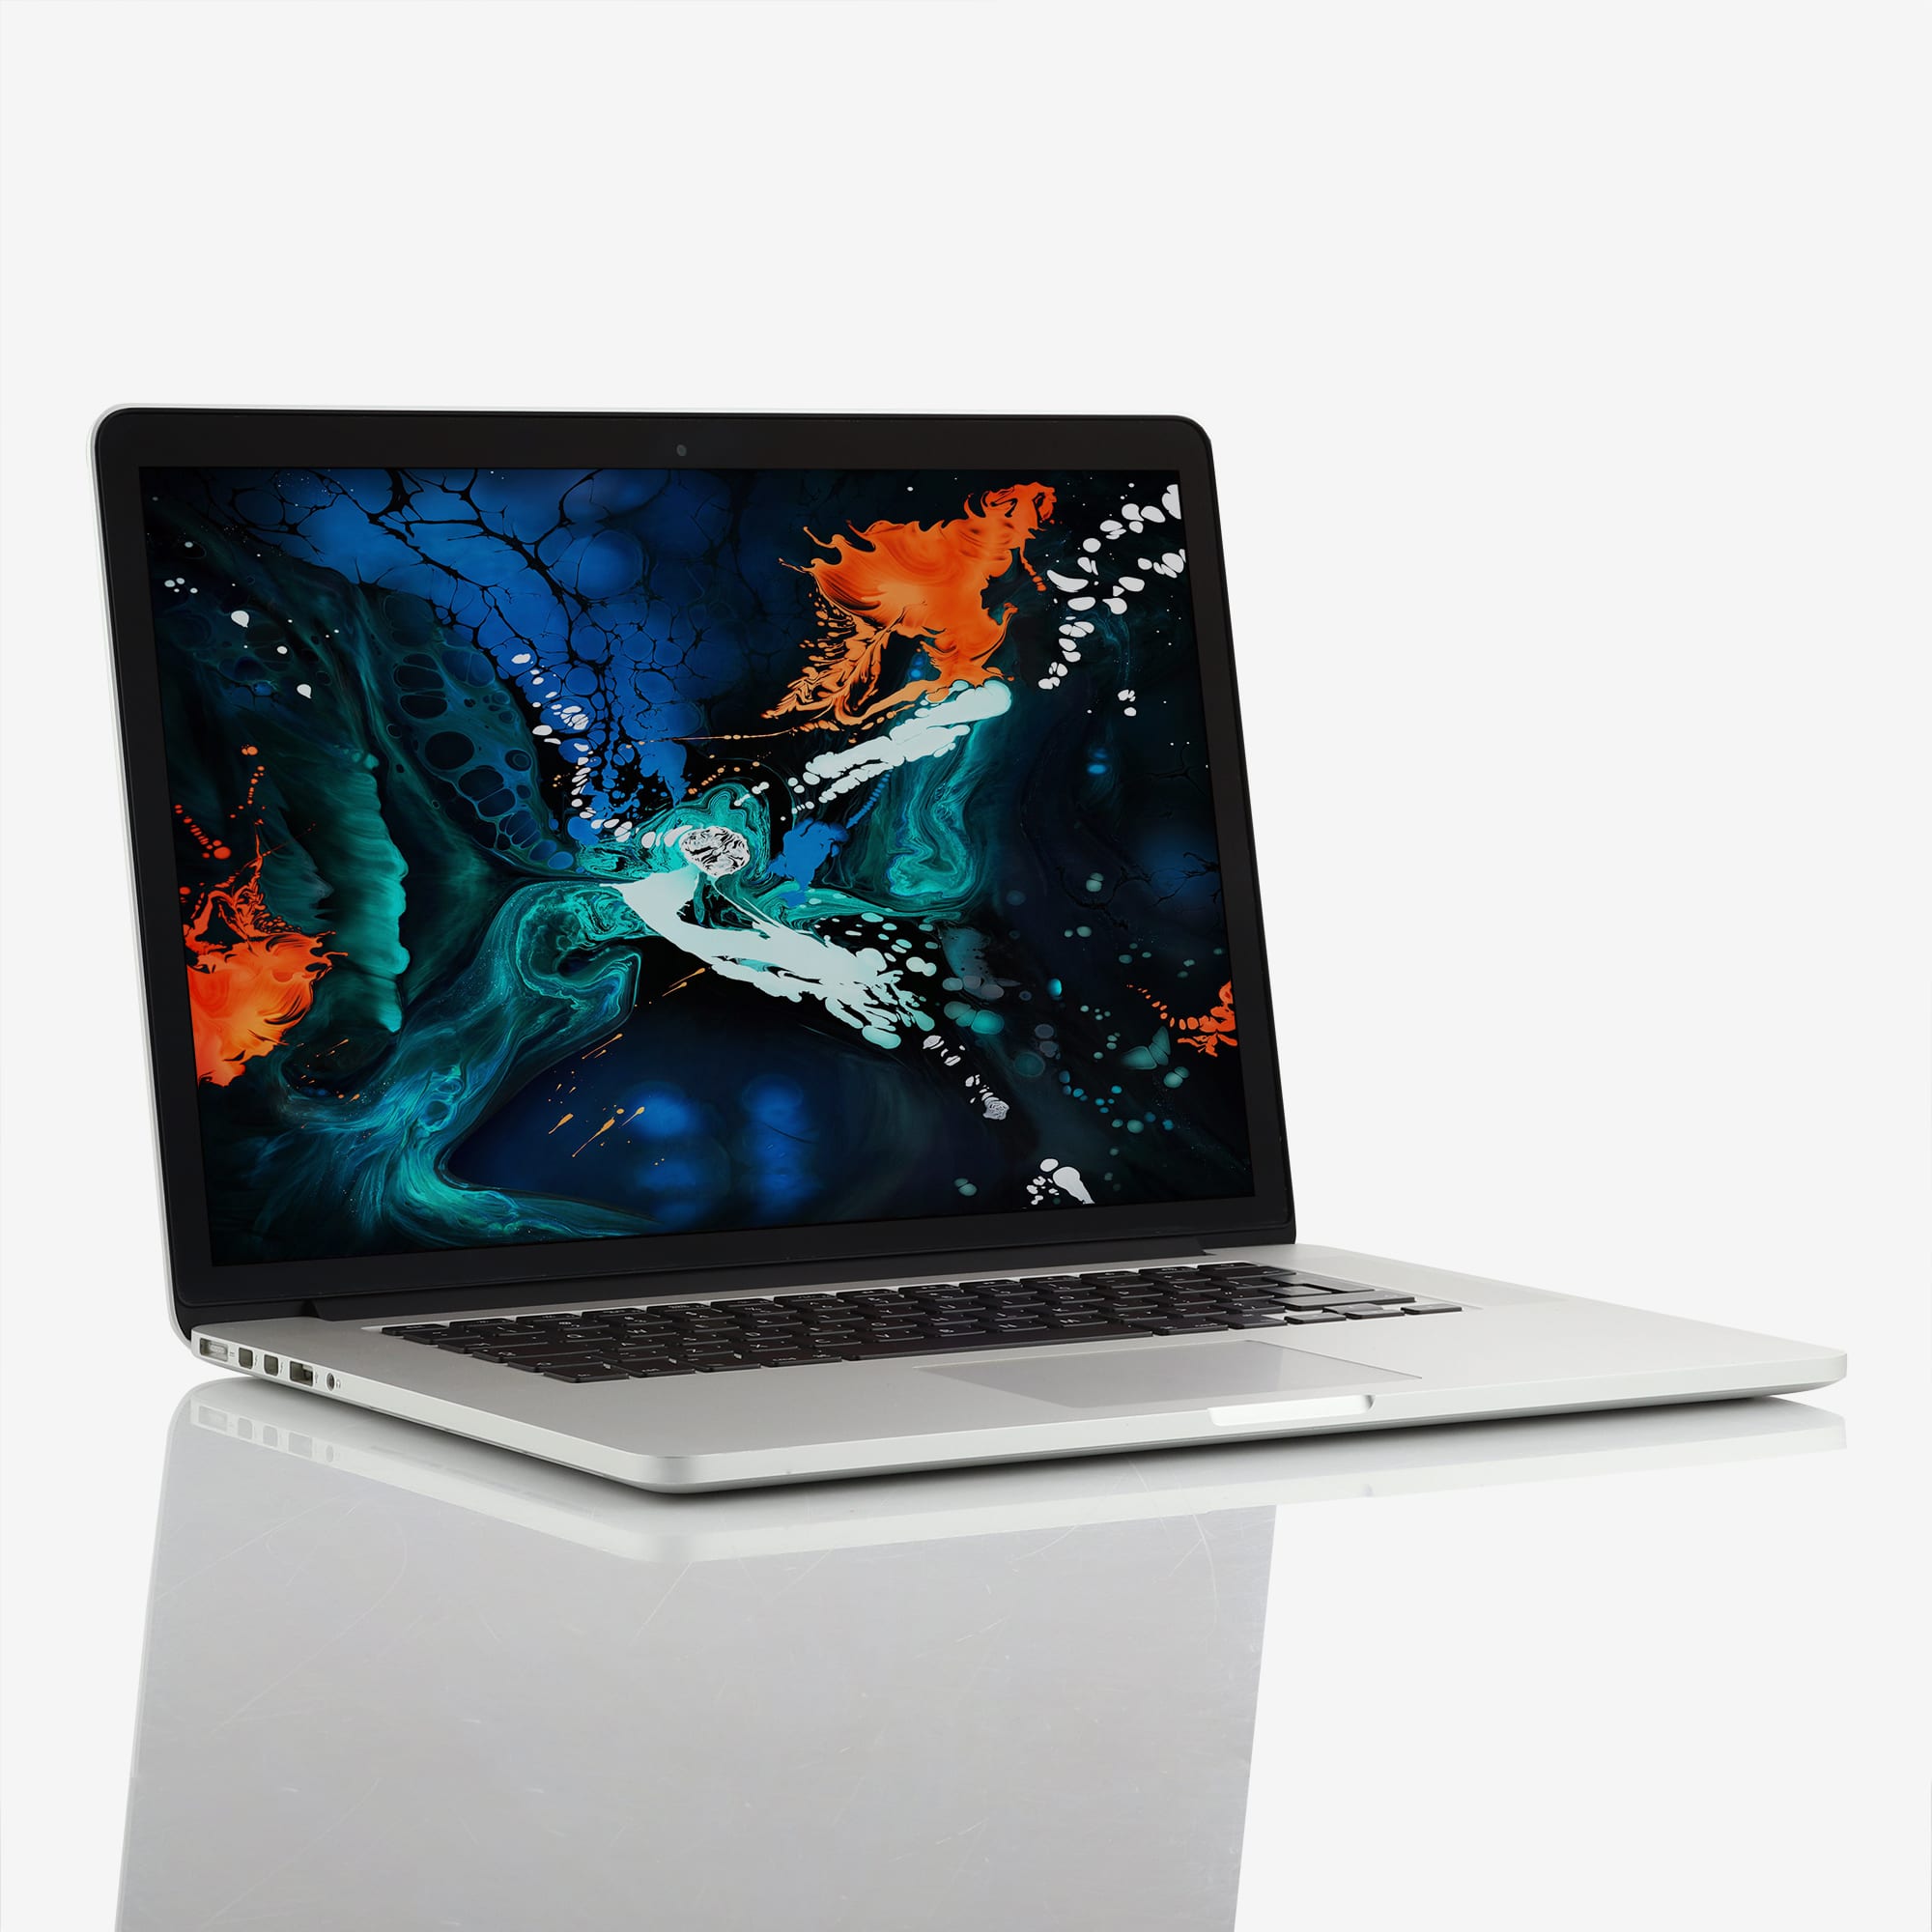 1 x Apple MacBook Pro Retina 15 Inch Intel Core i7 2.60 GHz (2013)